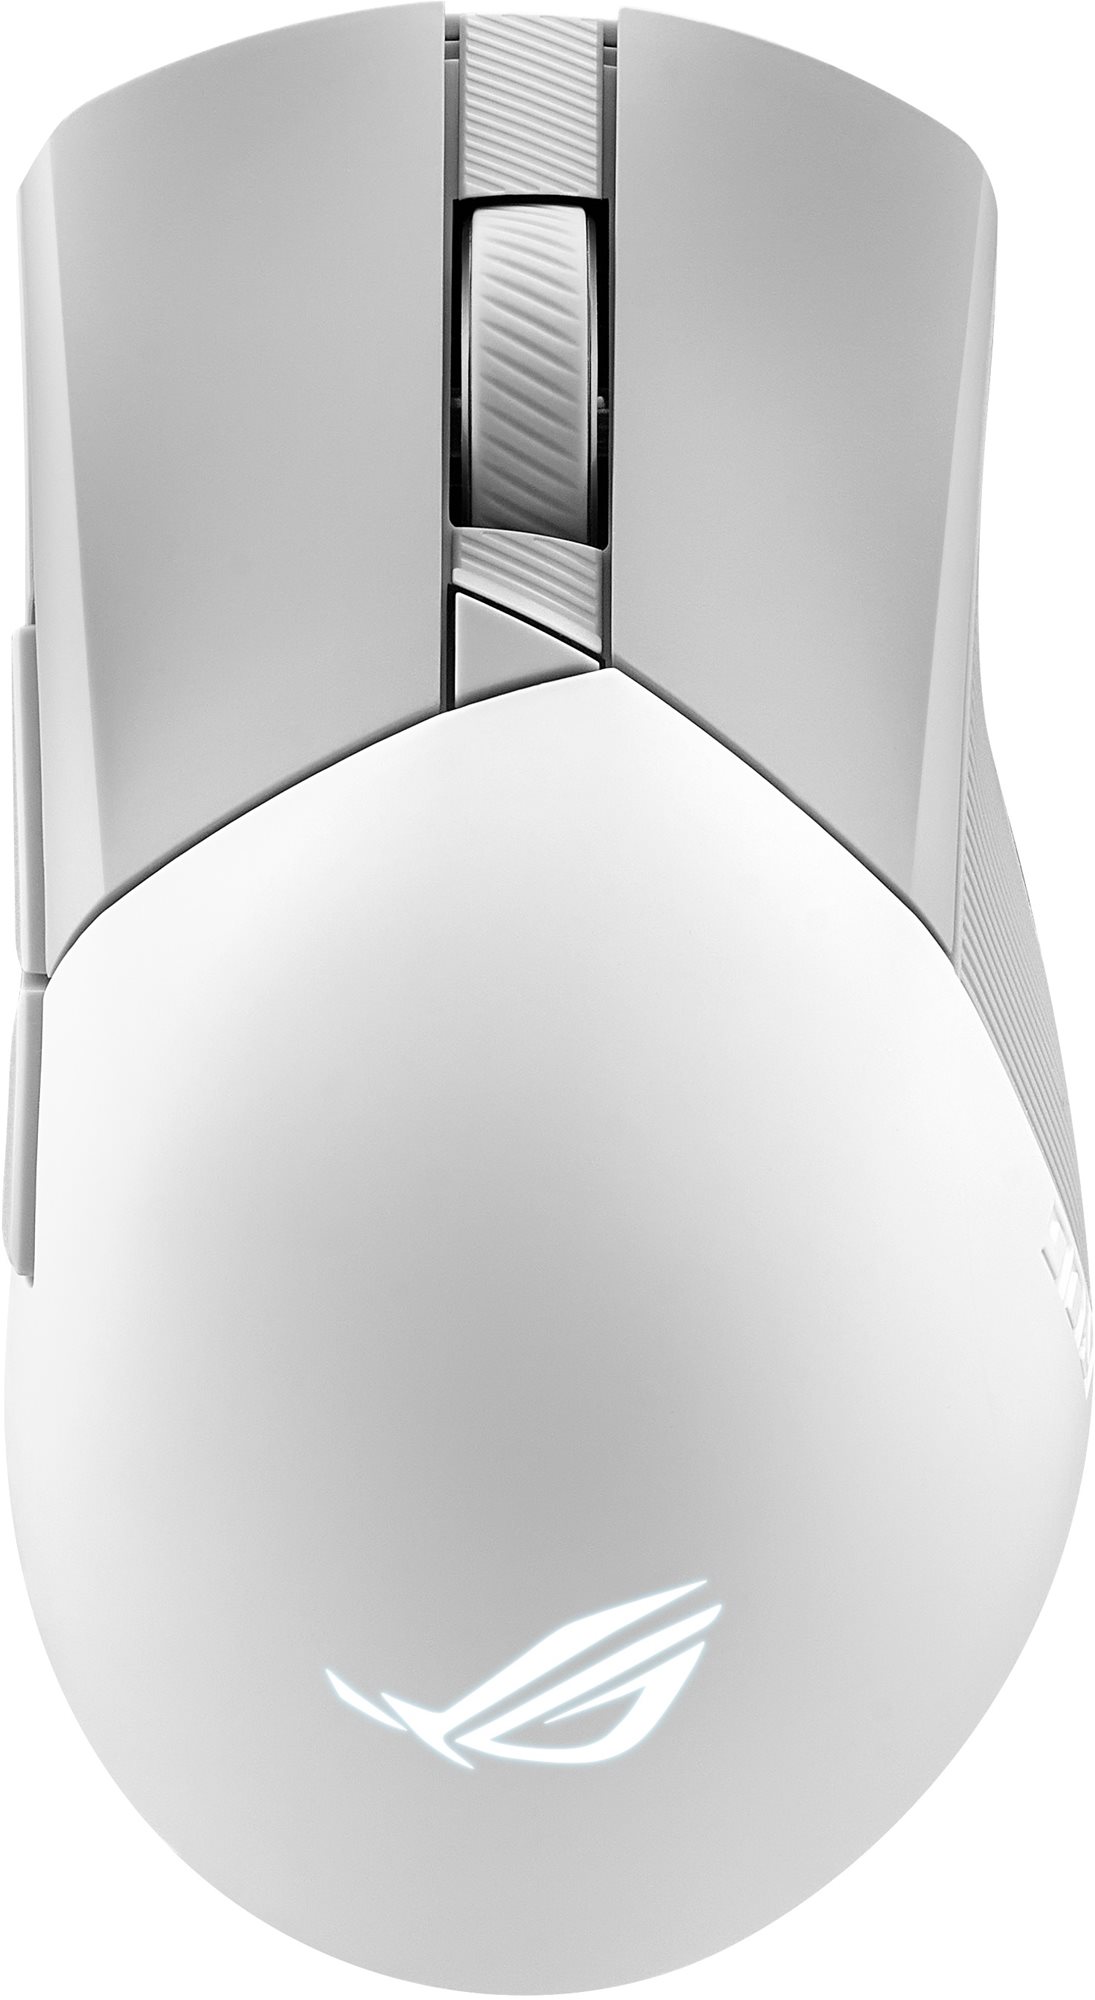 ASUS ROG GLADIUS III Wireless Aimpoint White